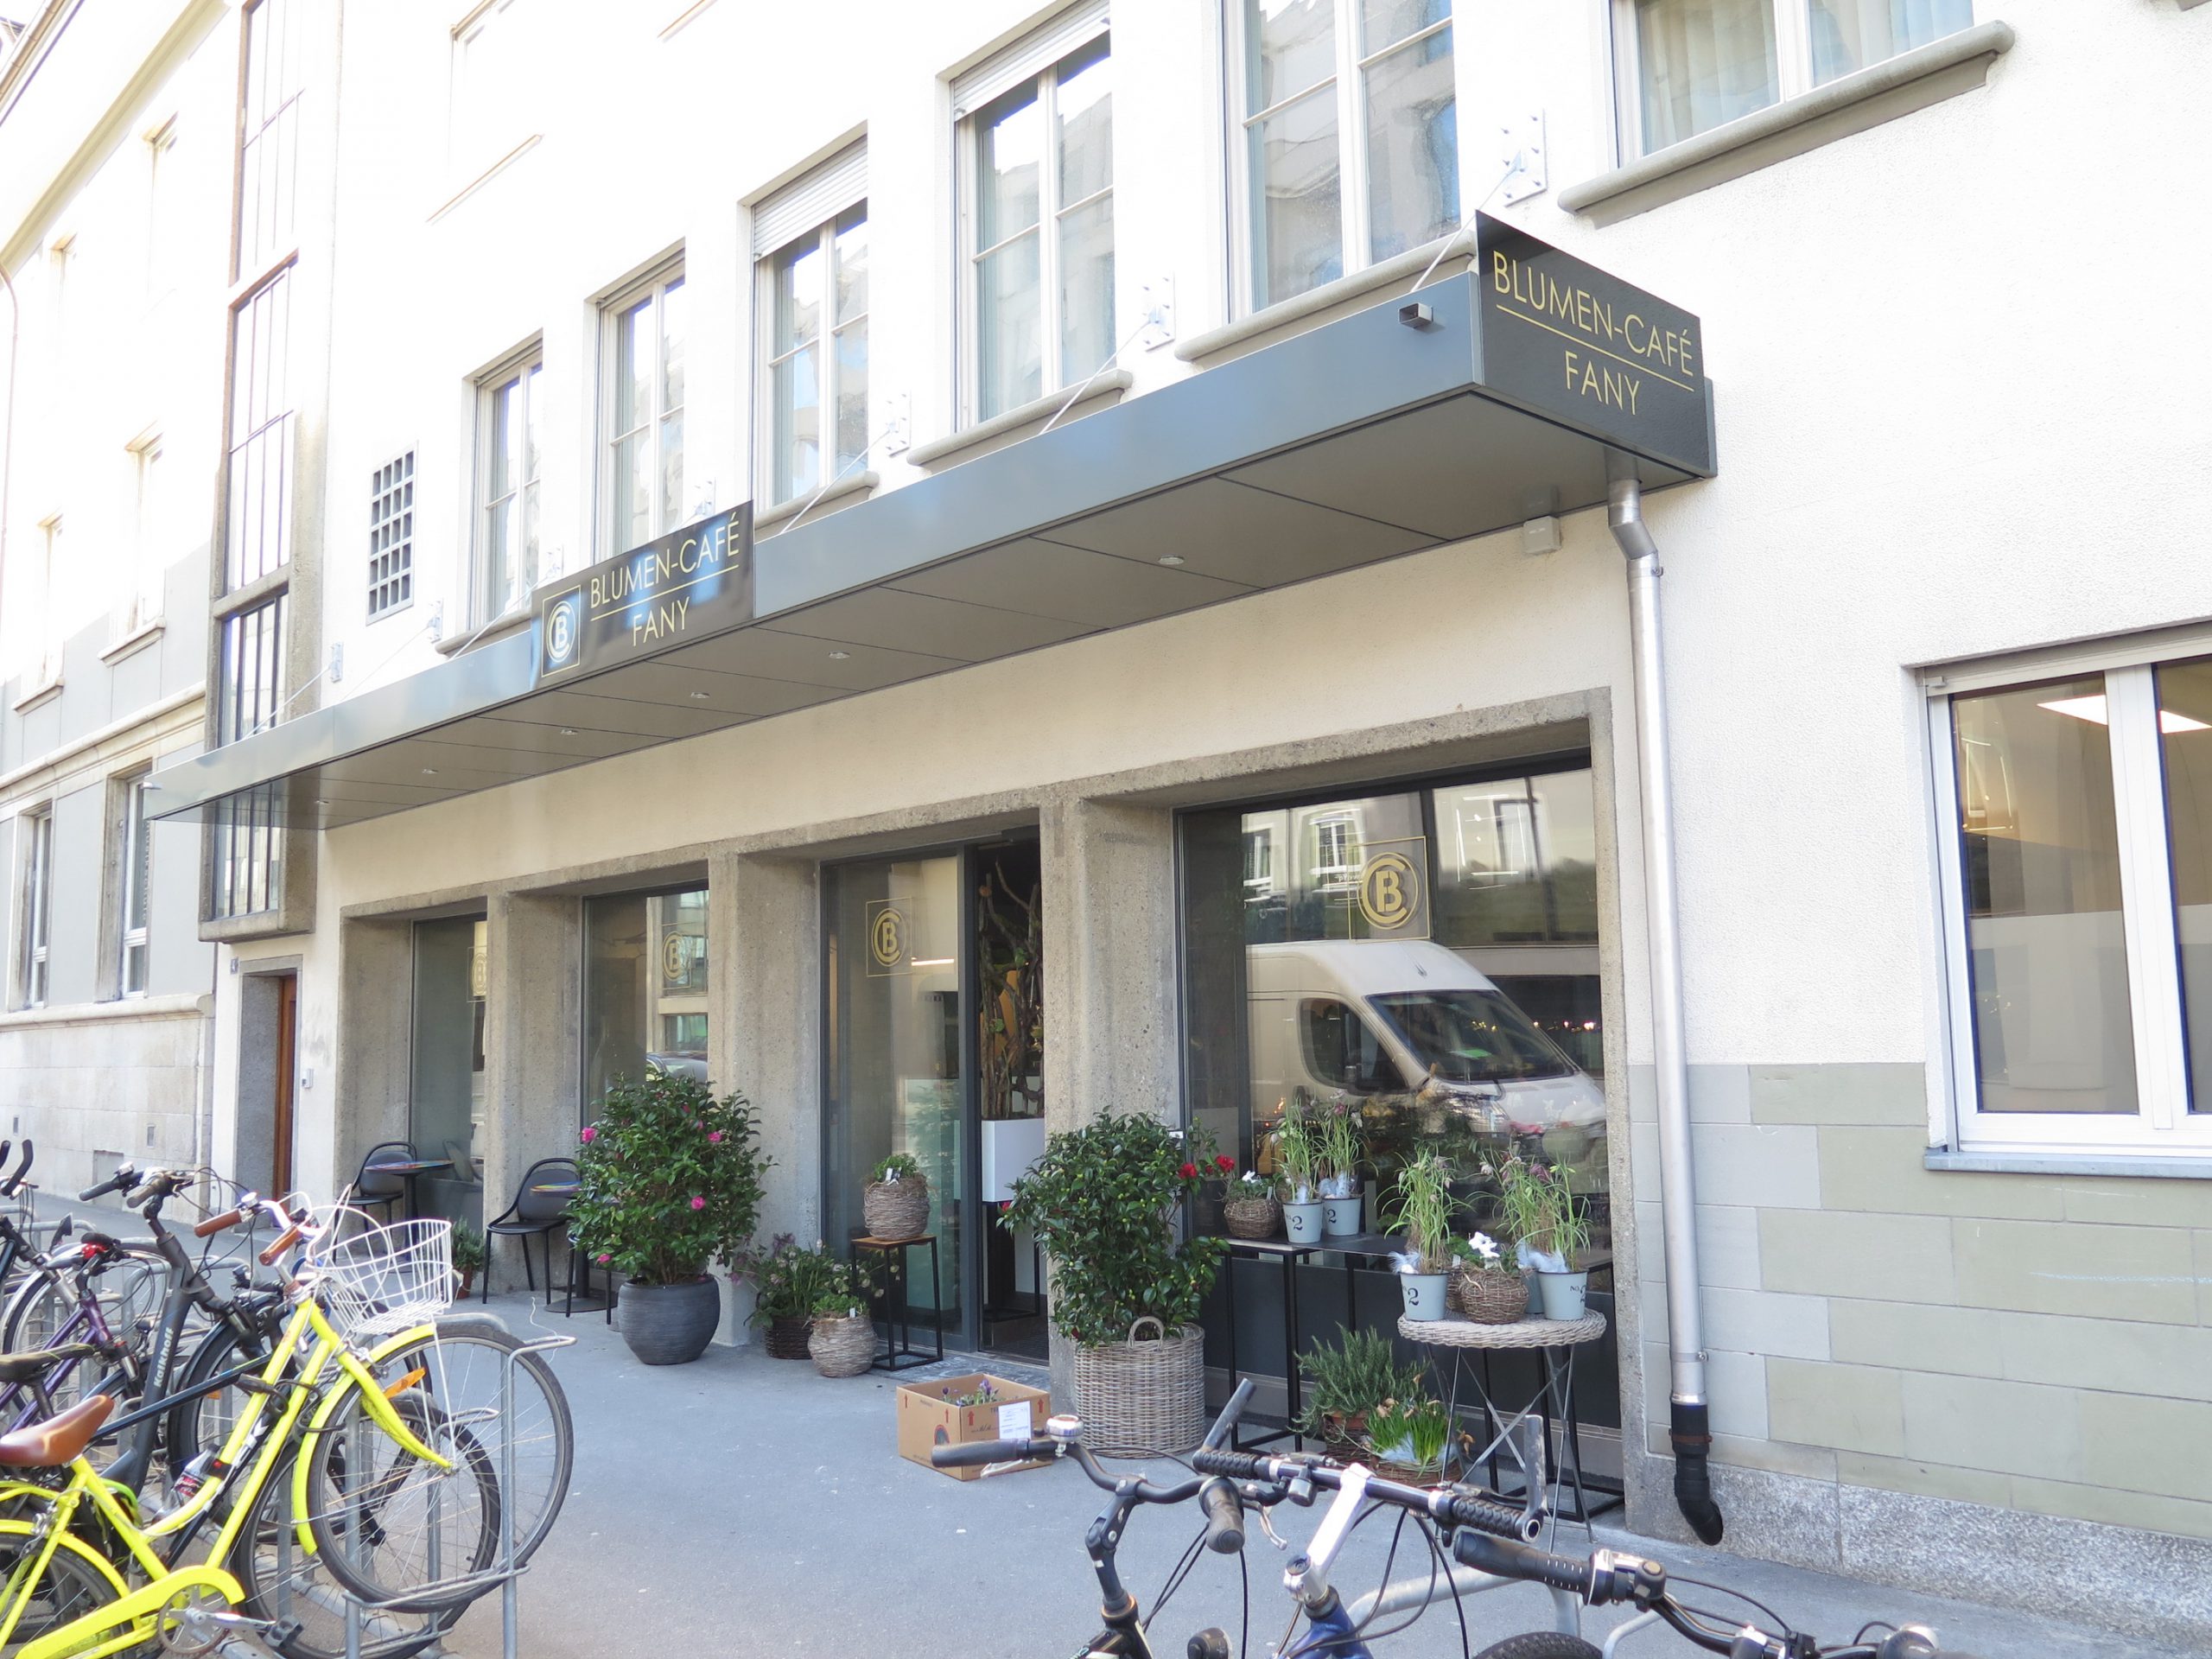 Blumen-Café Fany Winterthur